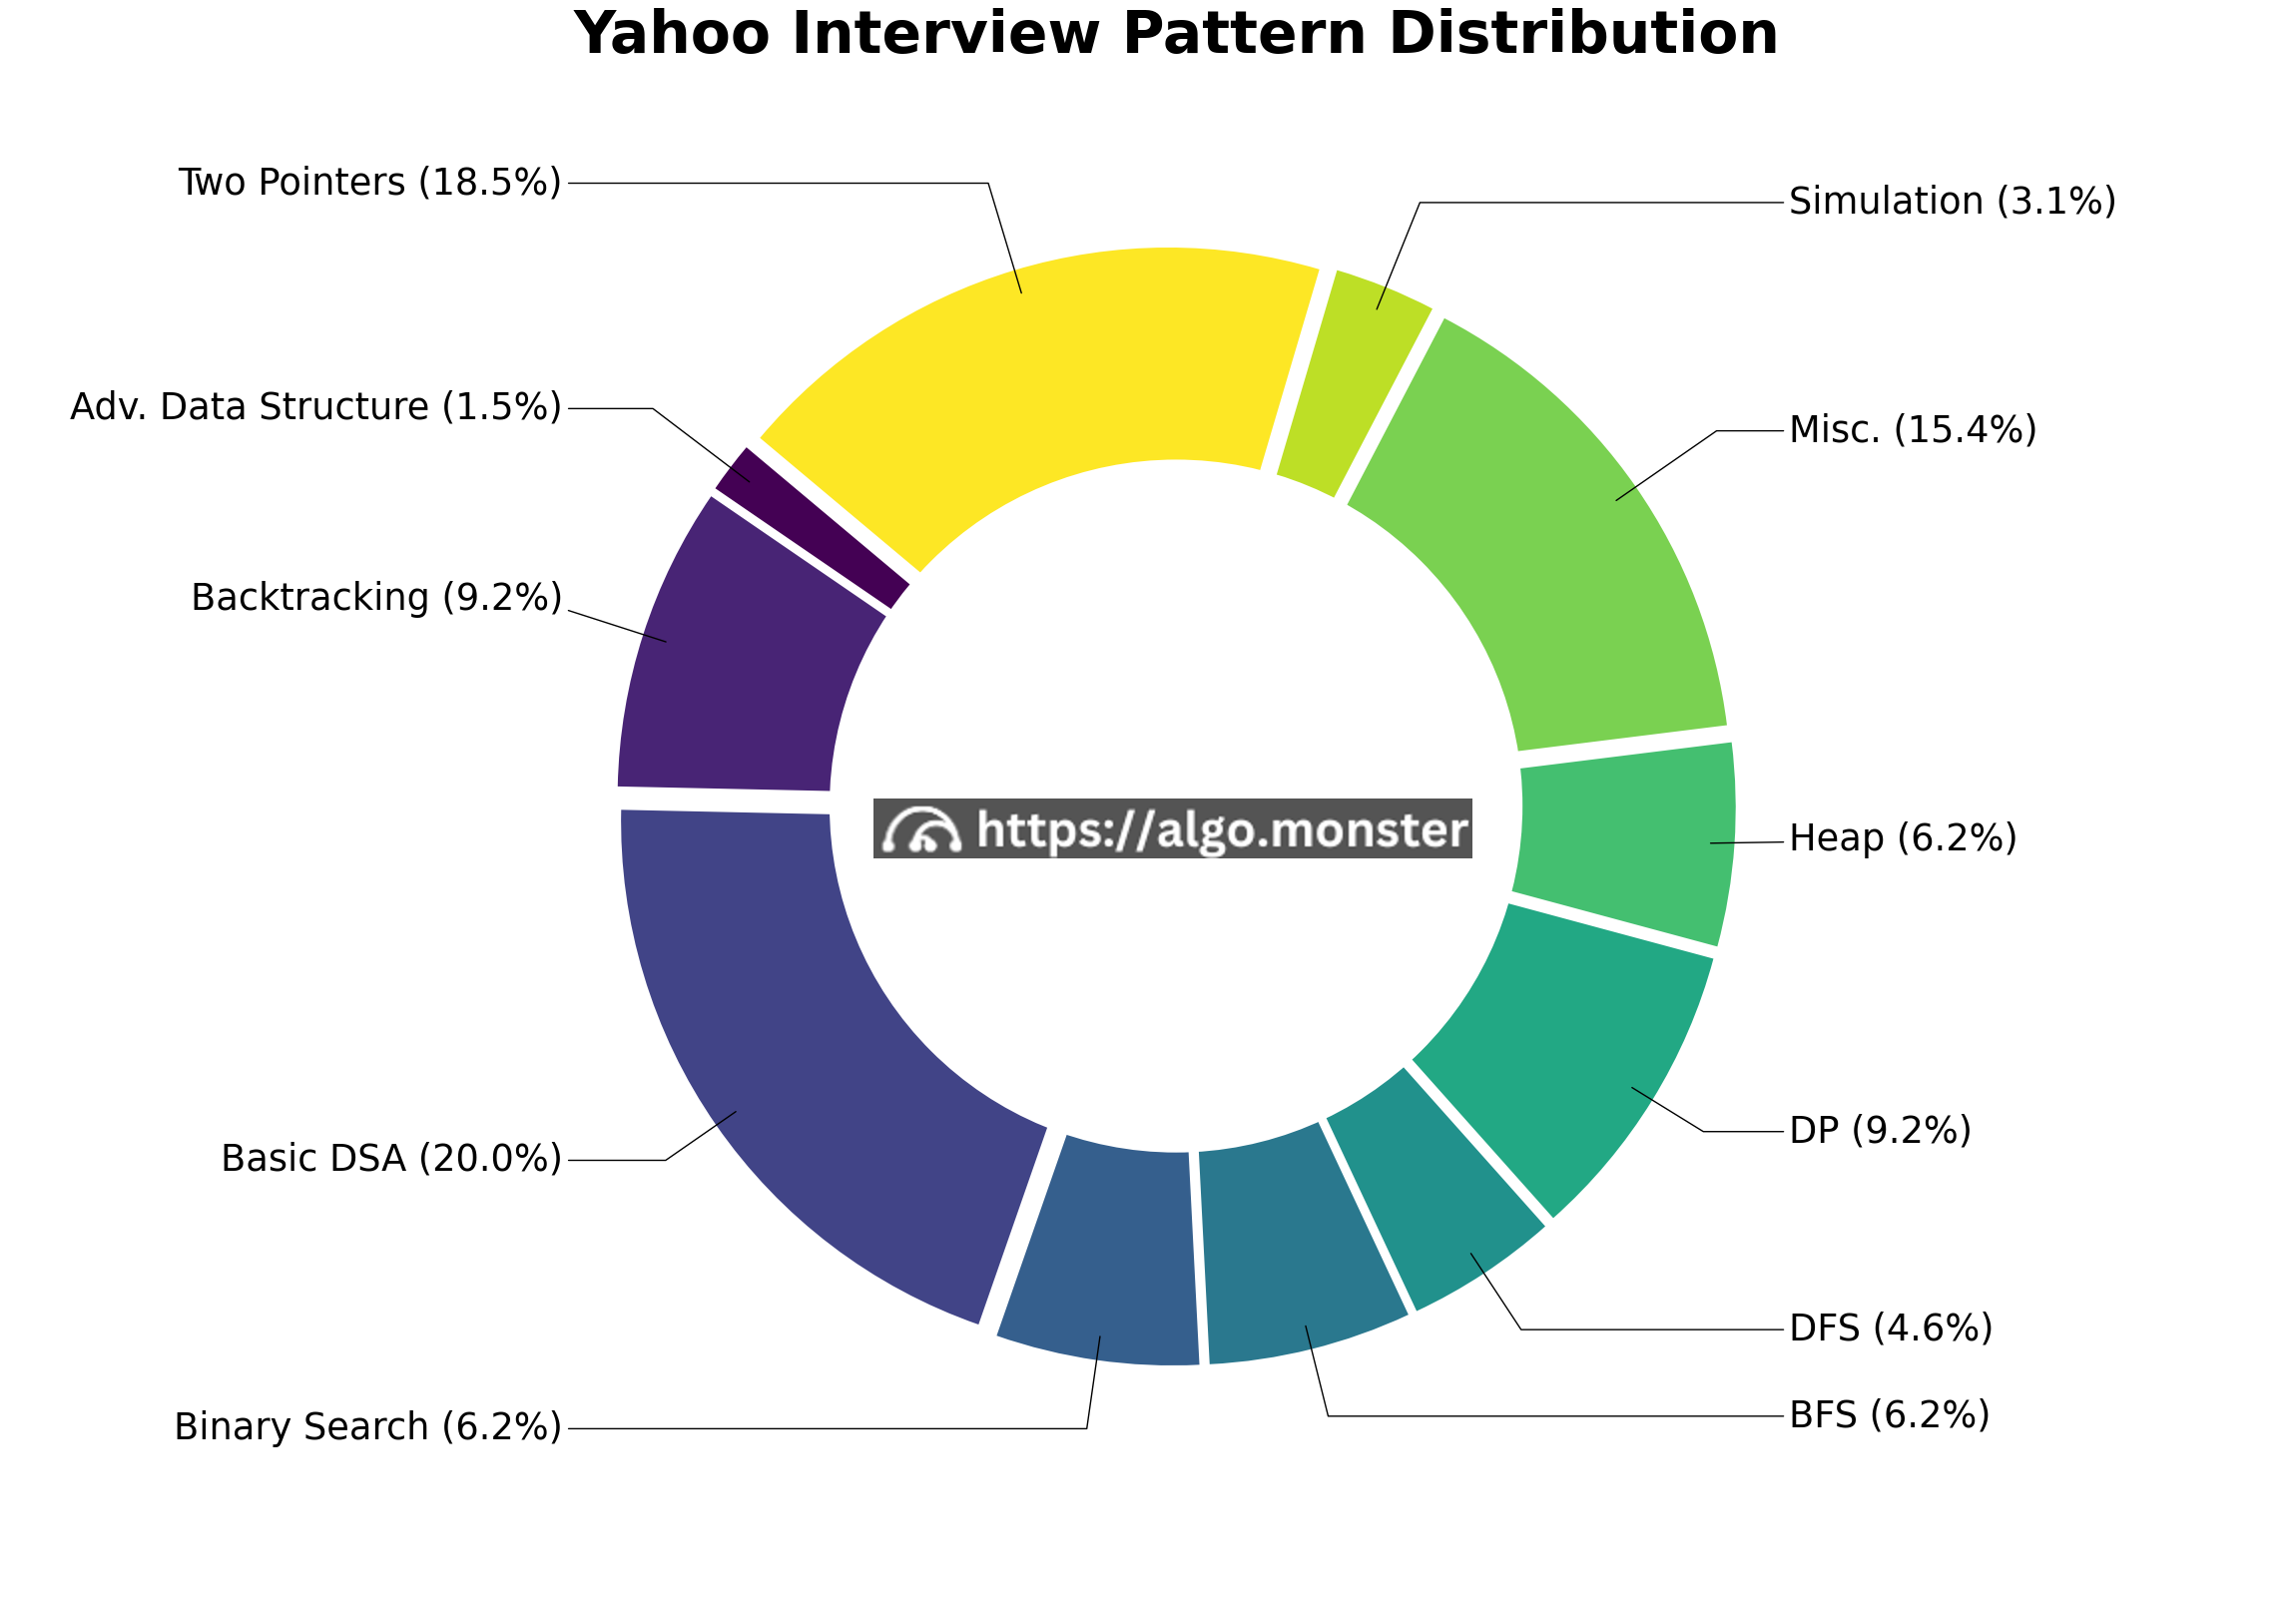 Yahoo interview questions breakdown